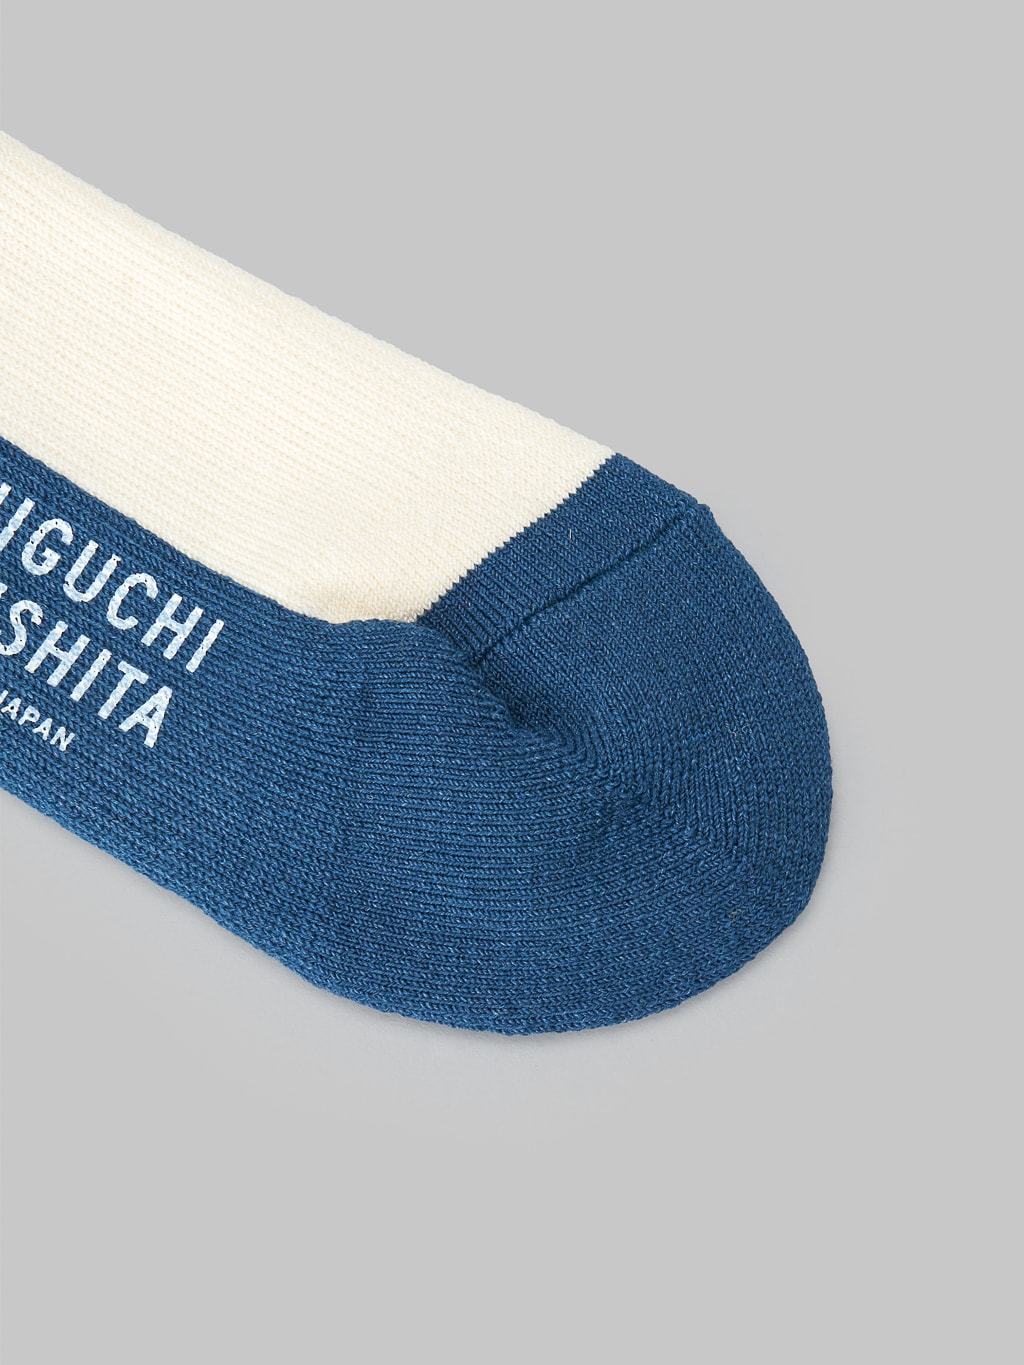 Nishiguchi Kutsushita Wool Pile Walk Socks Ivory fabric texture